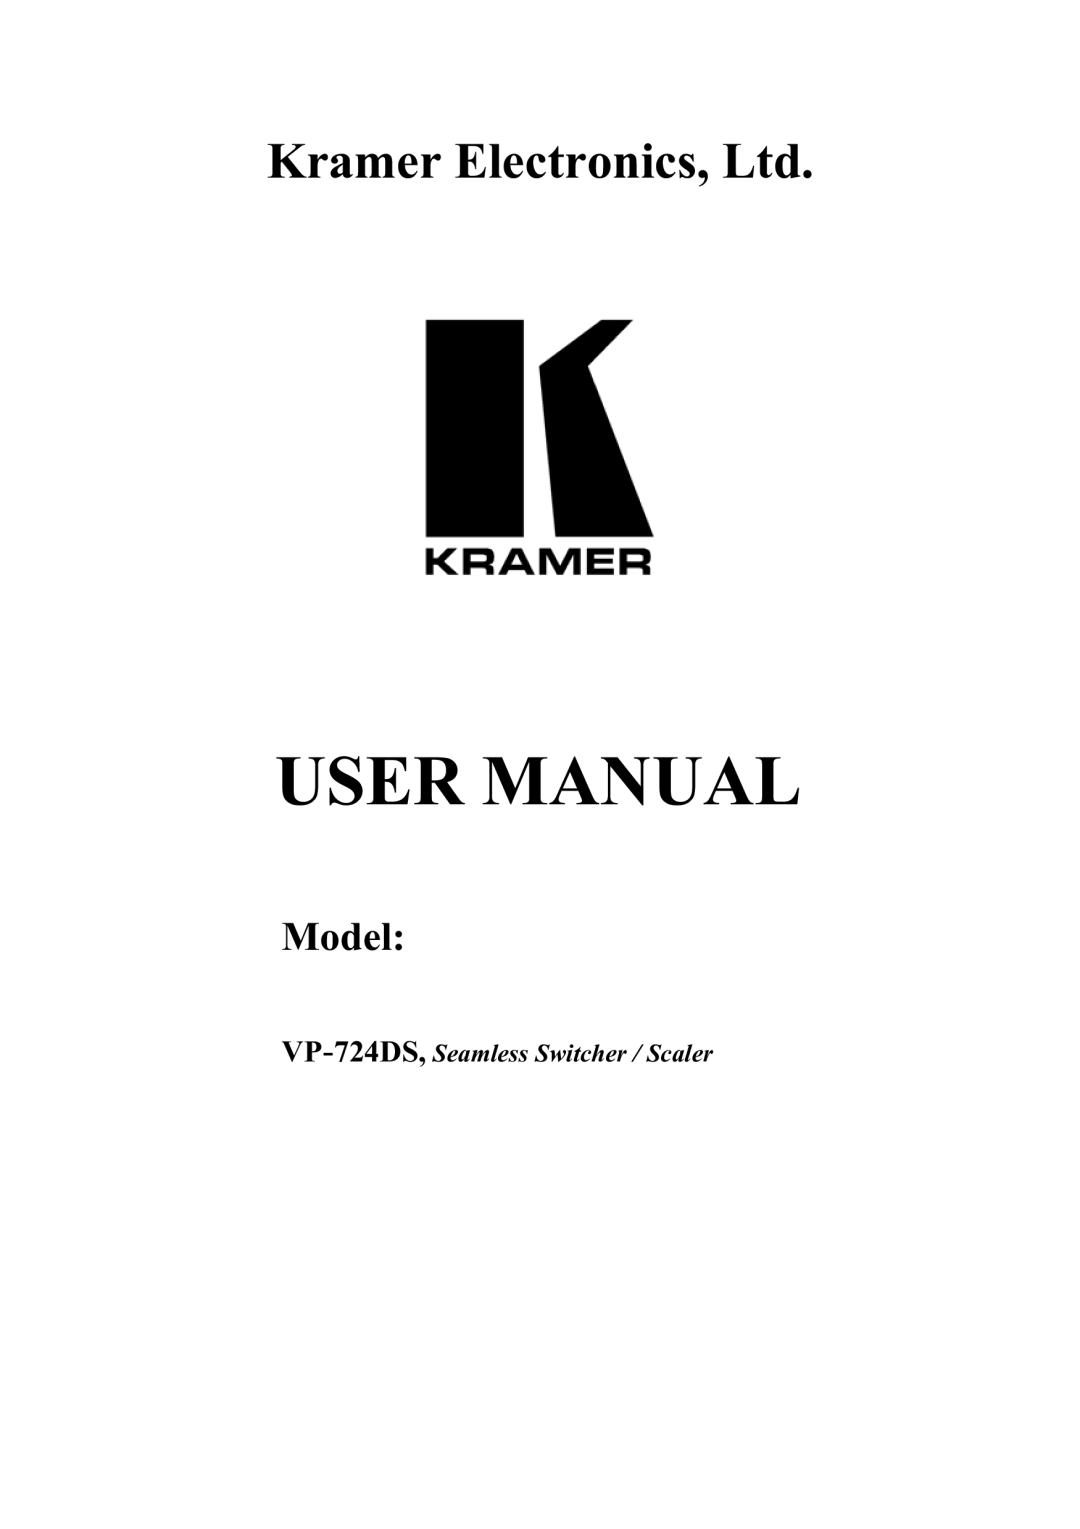 Kramer Electronics VP-724DS manual 9366HDPOHVV6ZLWFKHU6FDOHU, 8650$18$, Udphuohfwurqlfv/Wg, 0RGHO 